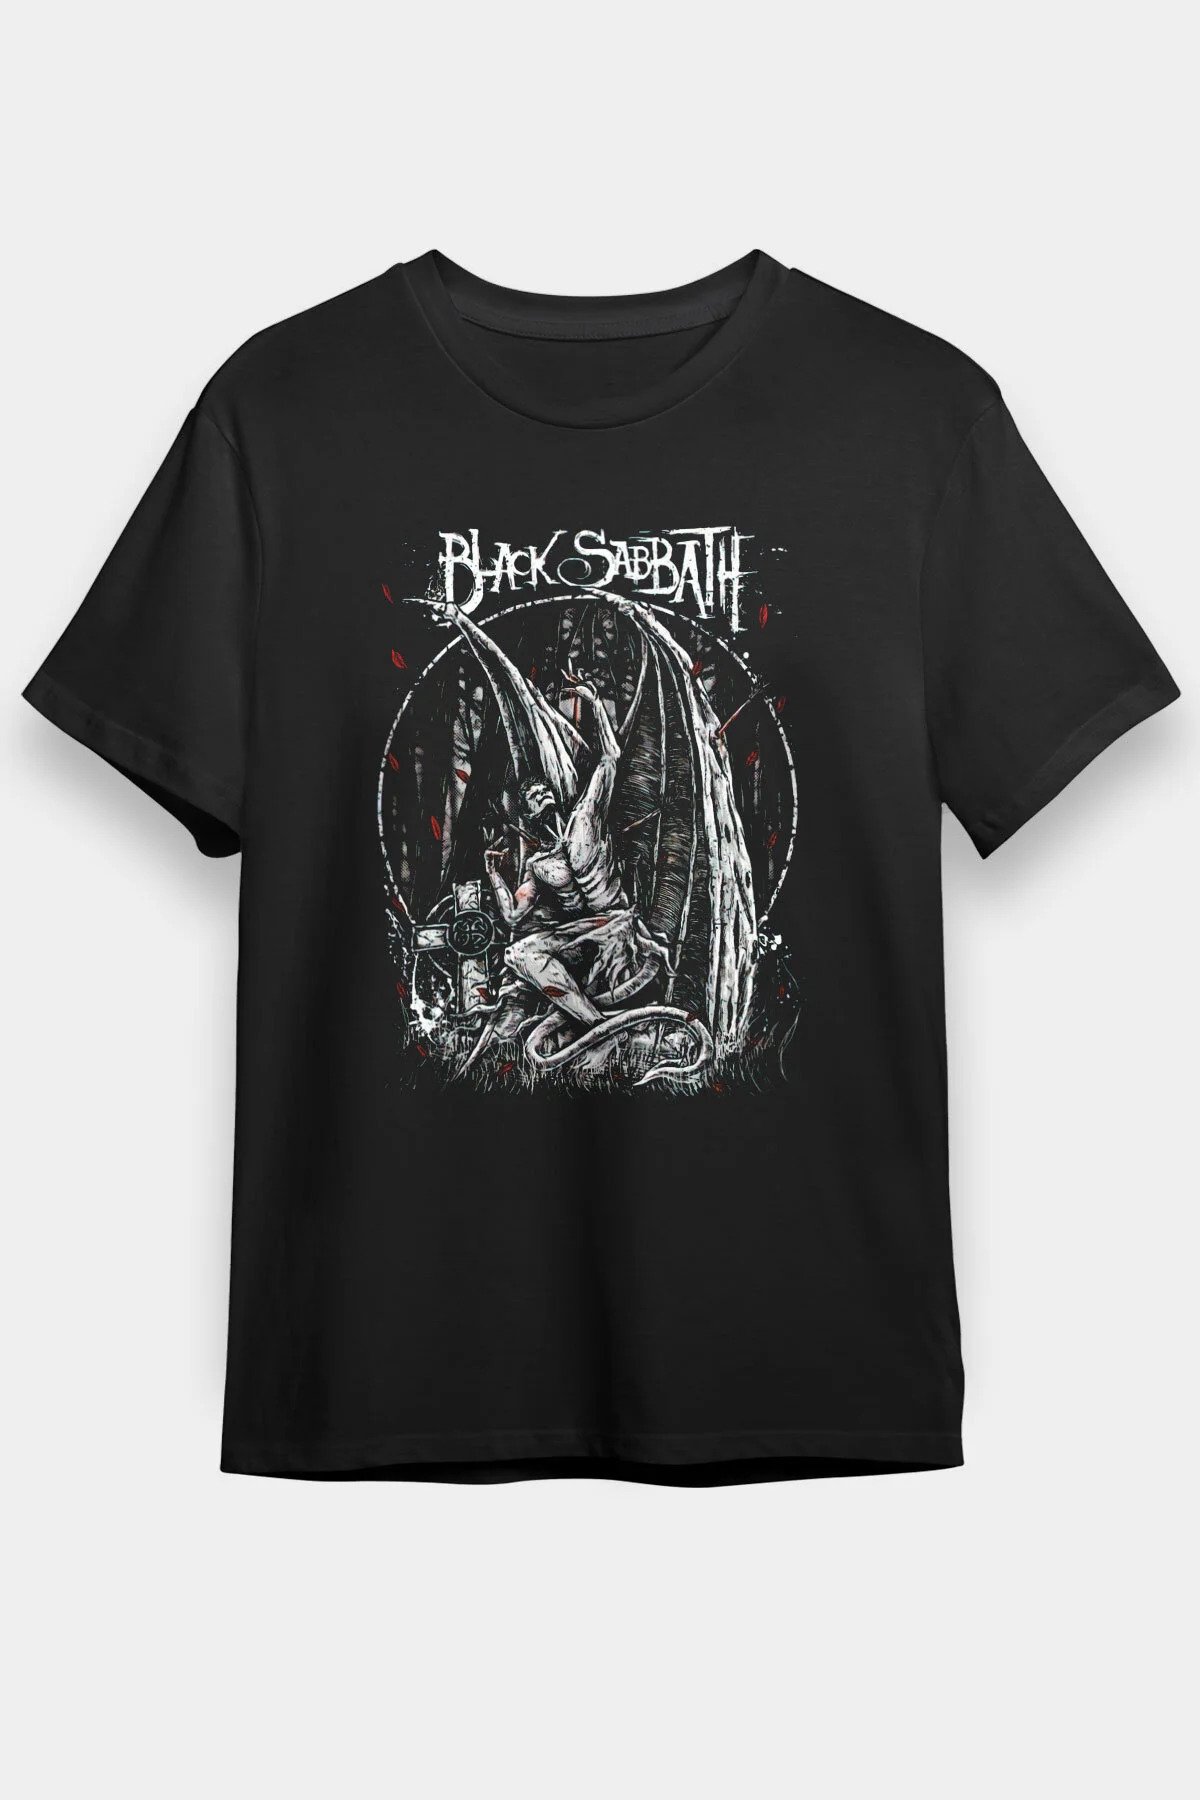 Black Sabbath ,Rock Music Band ,Unisex Tshirt 53